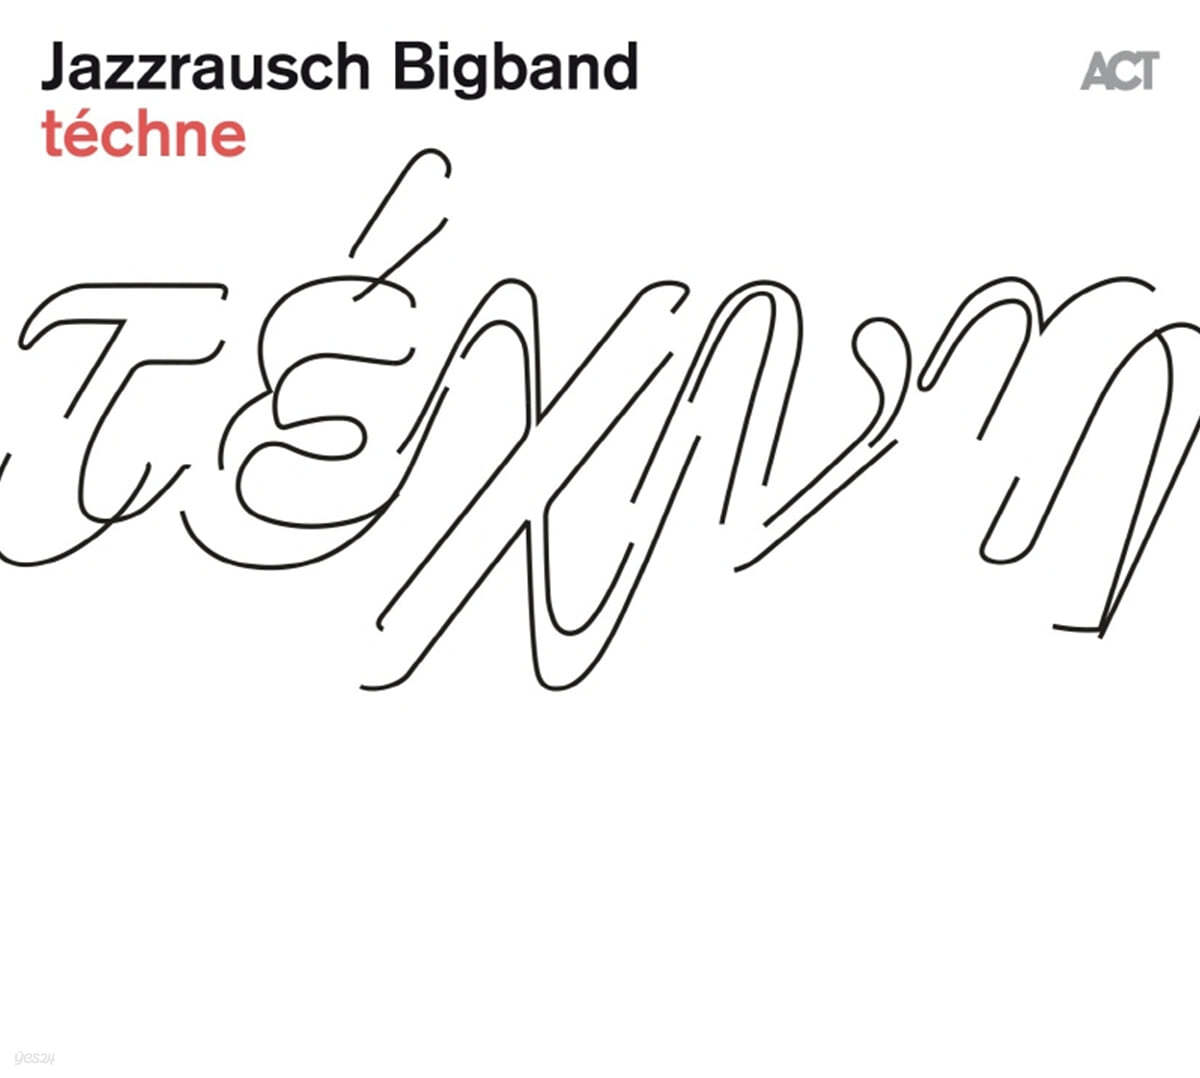 Jazzrausch Bigband (재즈라우쉬 빅밴드) - techne [LP] 